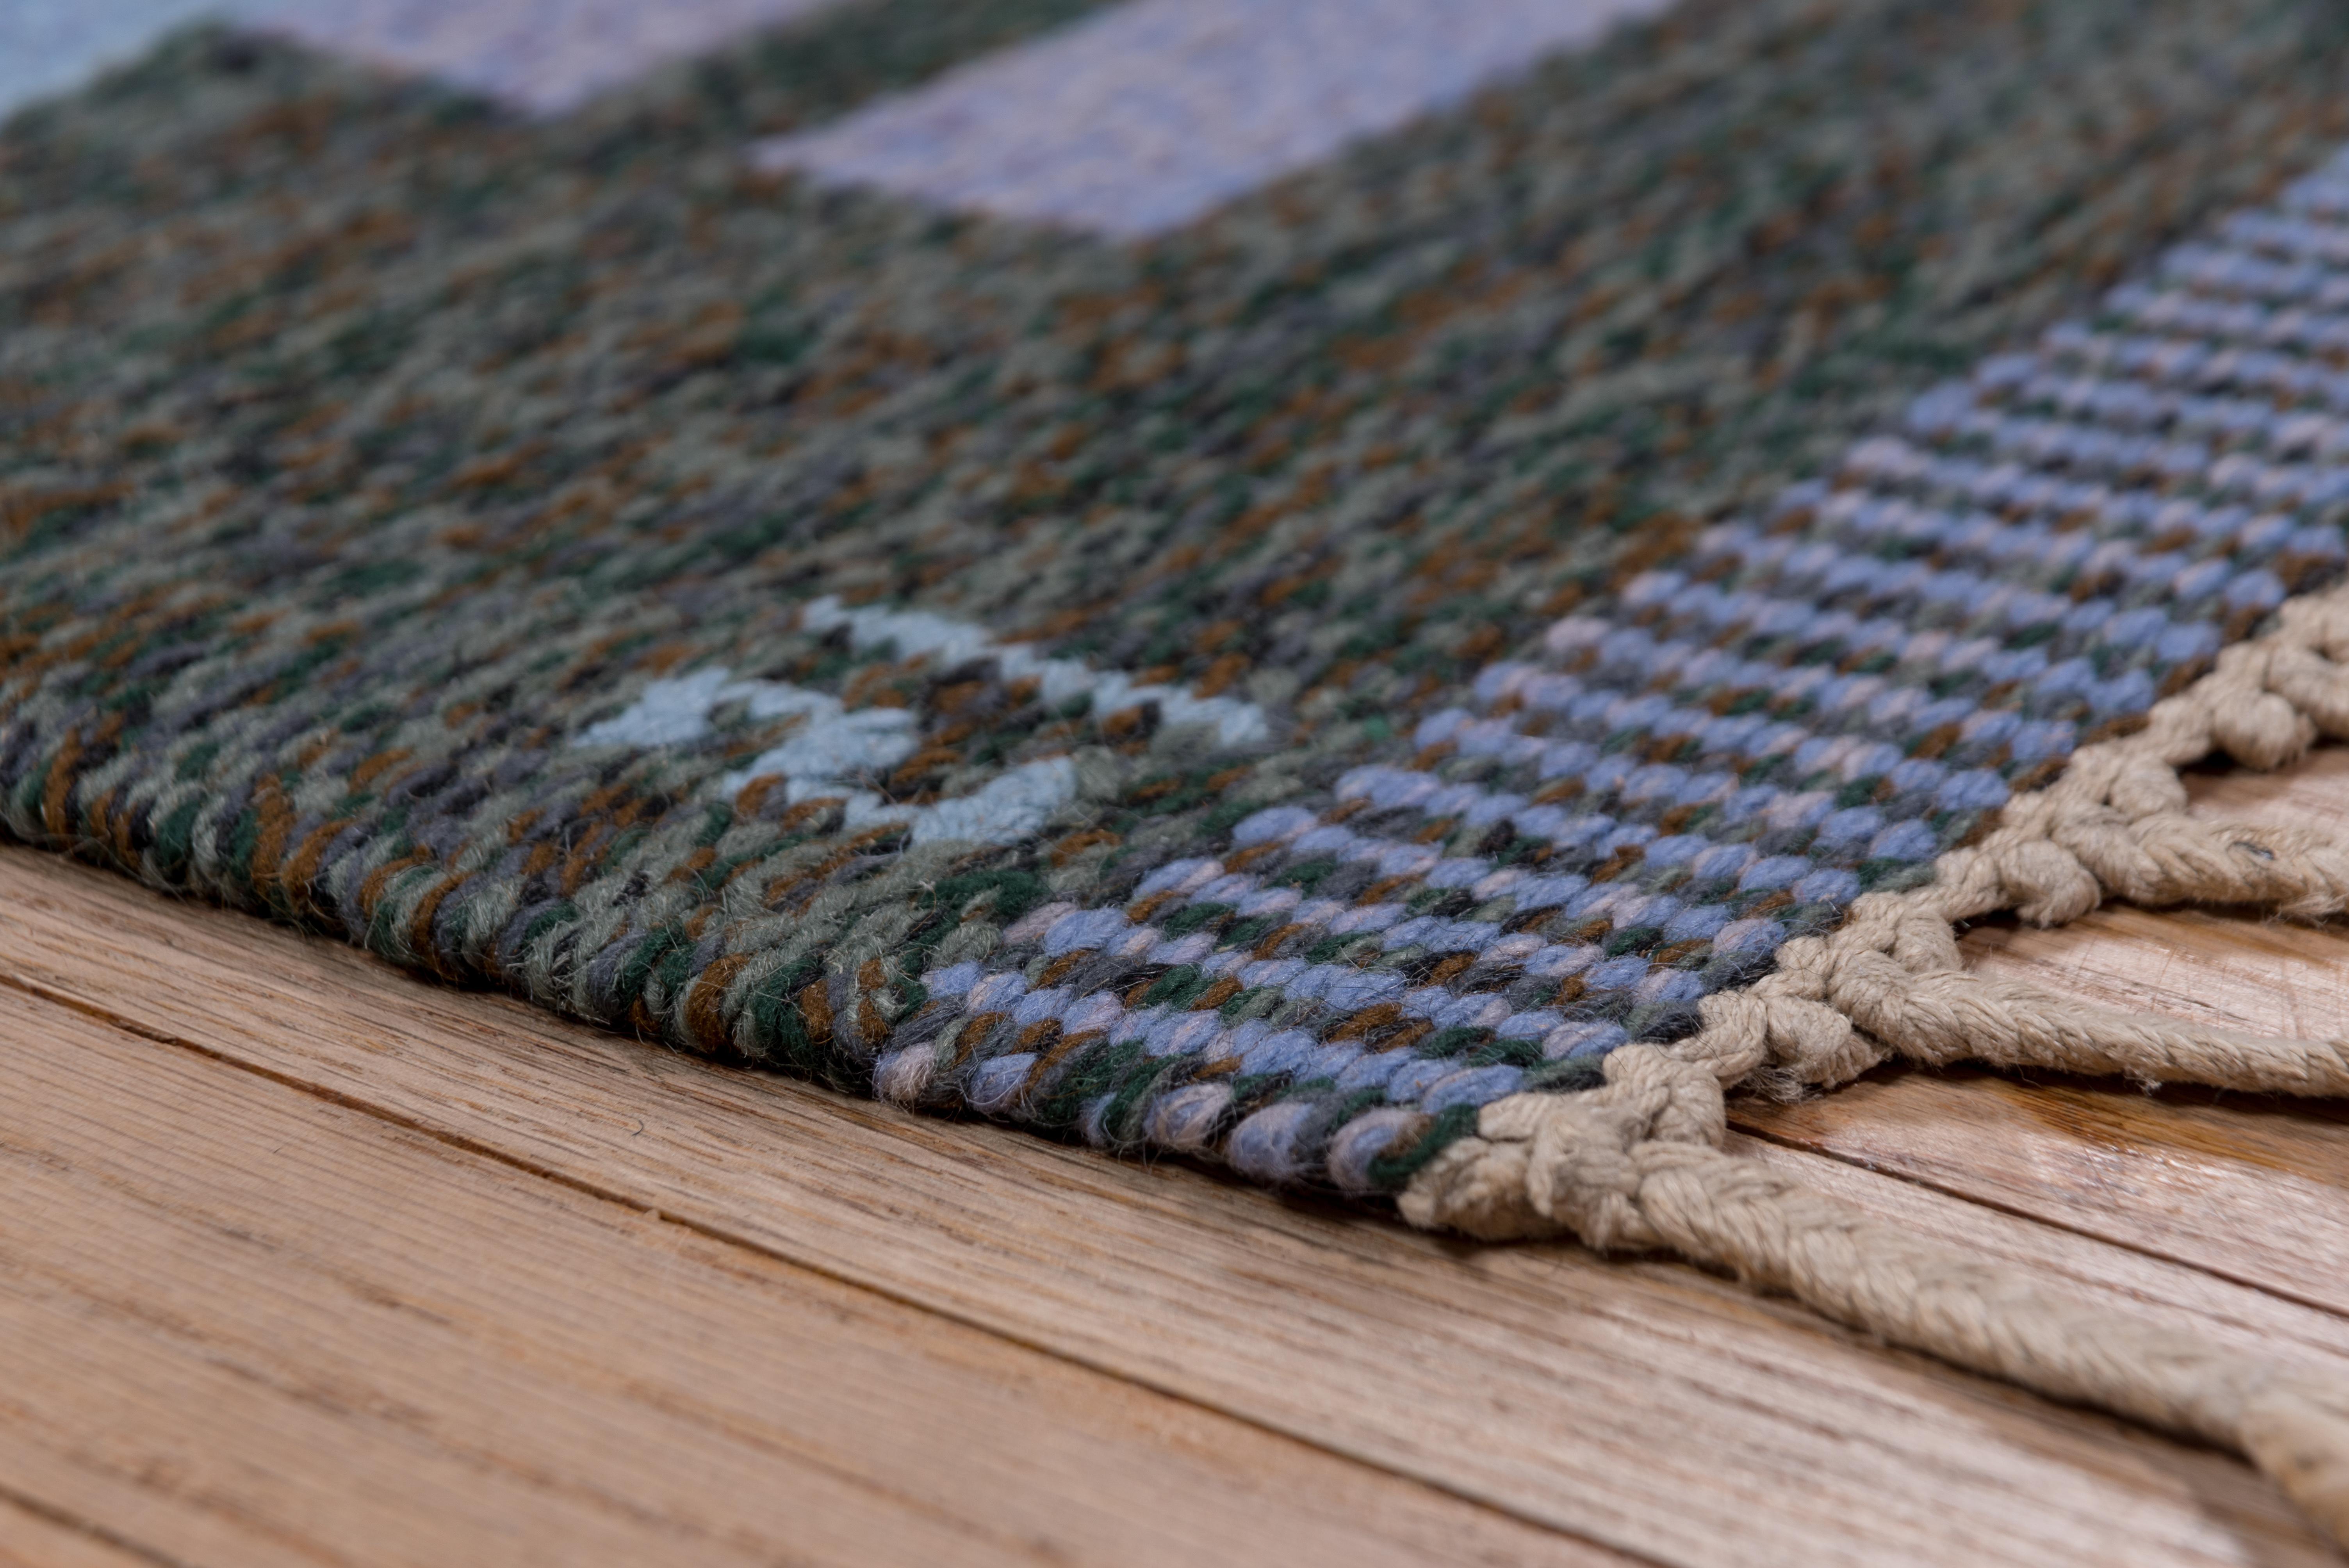 Hand-Woven 1940s Scandinavian Rollaken Flatweave Rug, Blue Field, Charcoal Gray Border